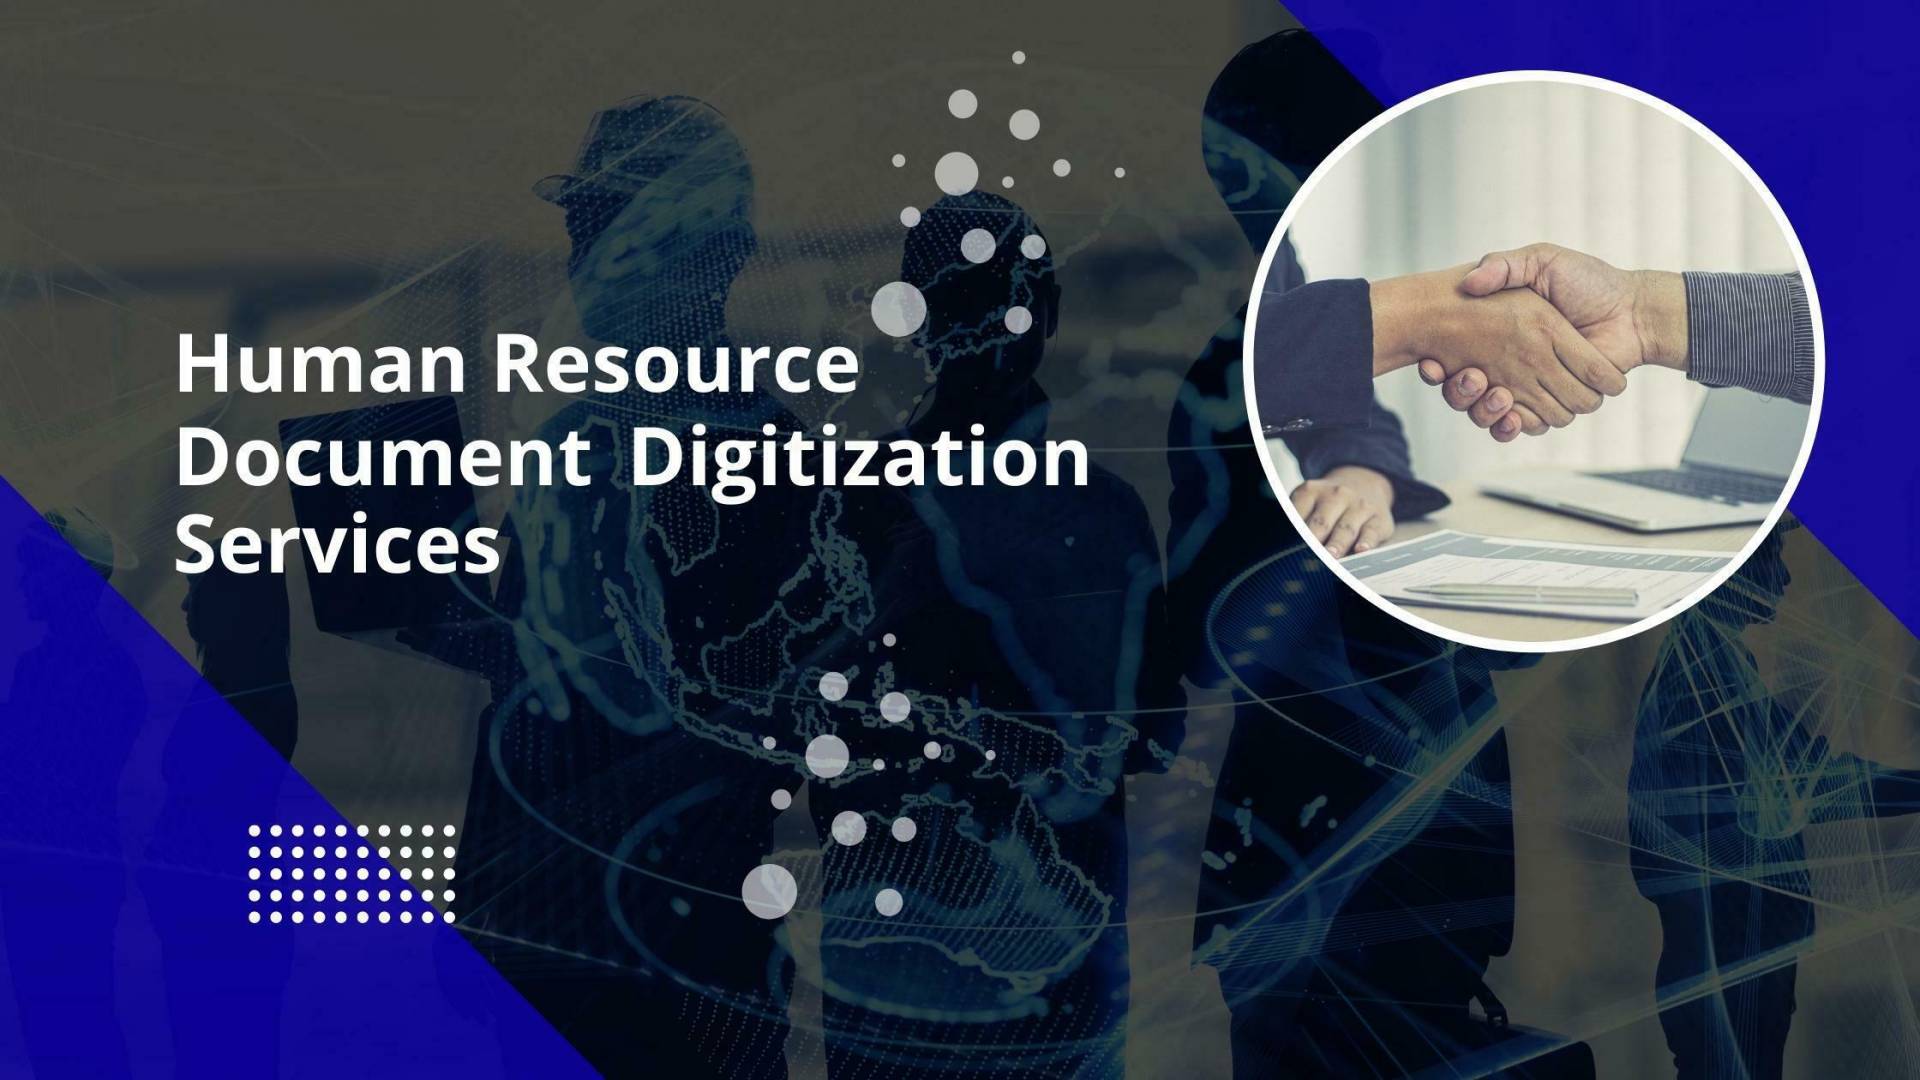 Human Resource document digitization